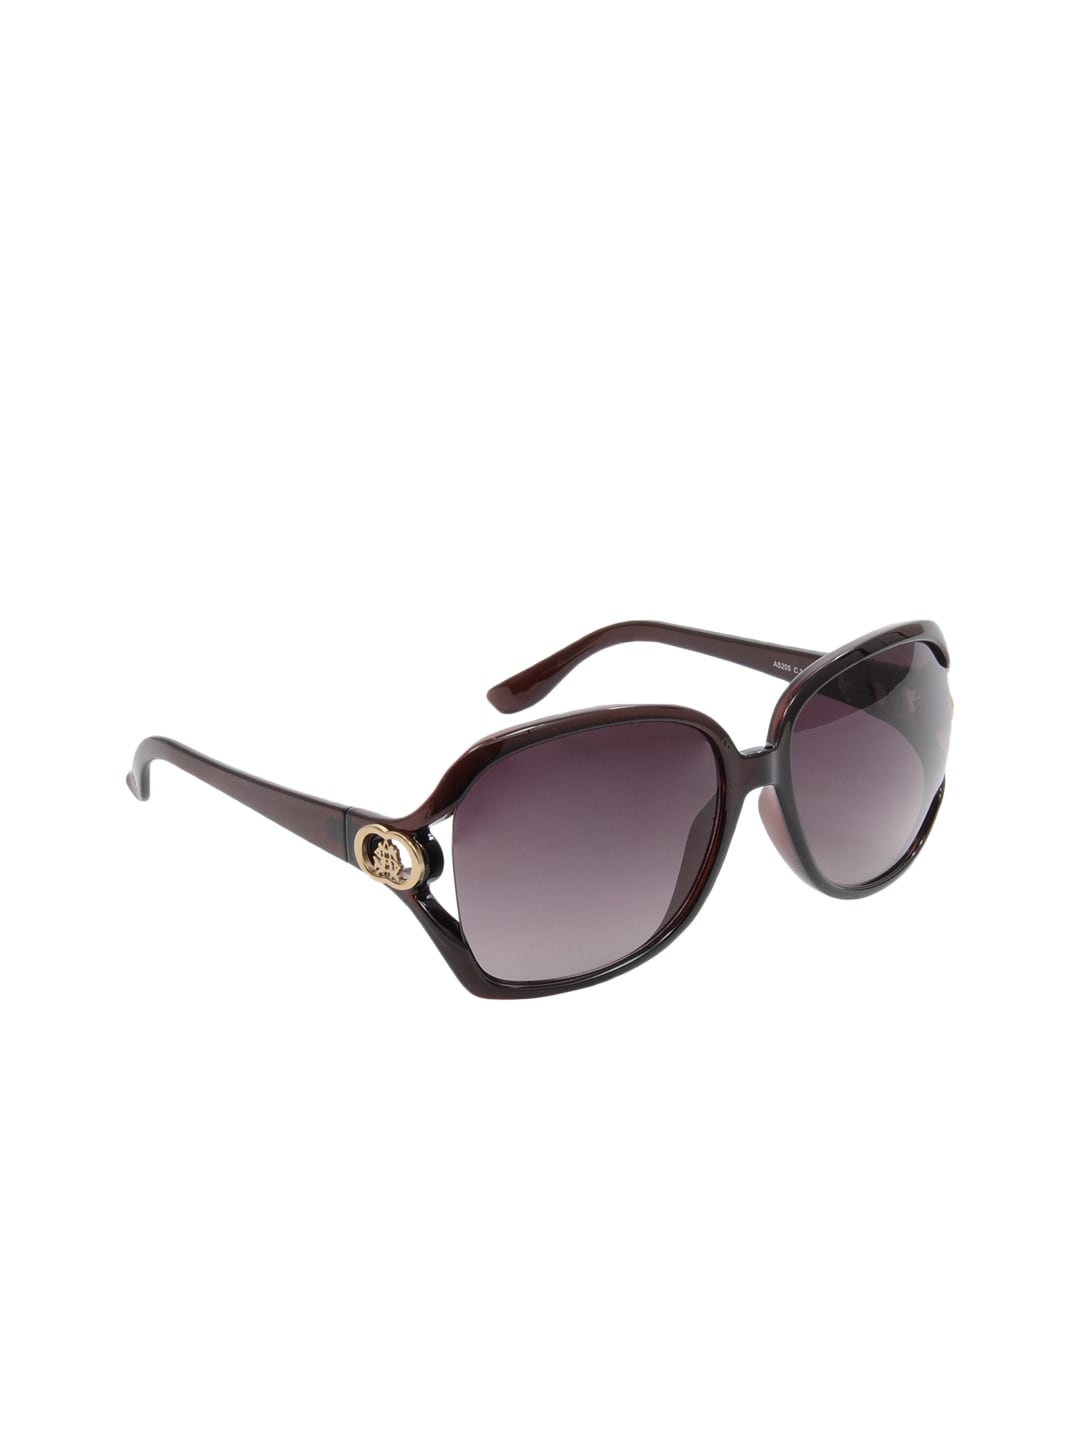 Allen Solly Women Oversized Sunglasses AS205-C3